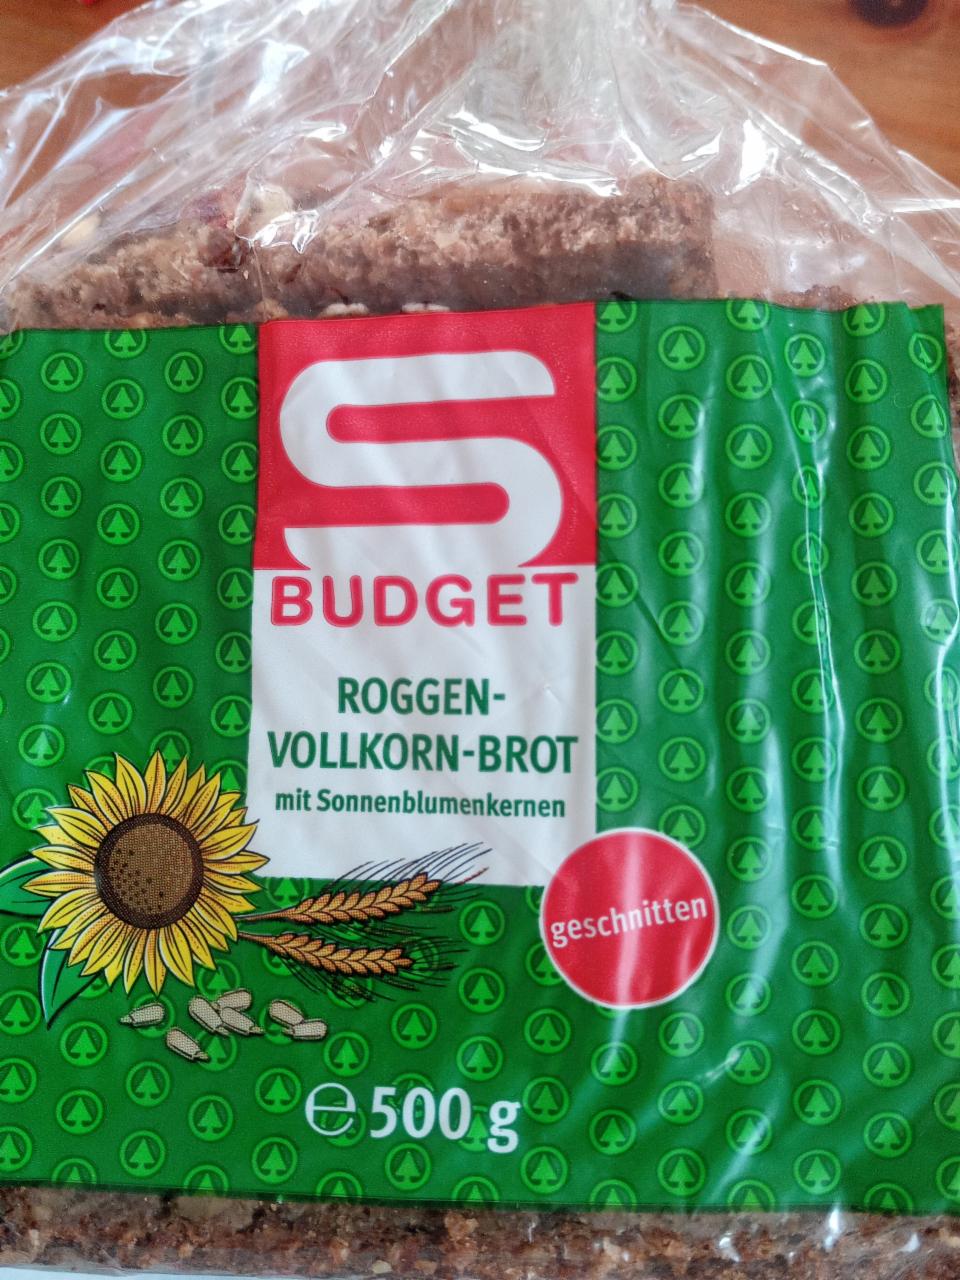 Fotografie - Roggen-Vollkorn-Brot mit Sonnenblumenkernen S Budget